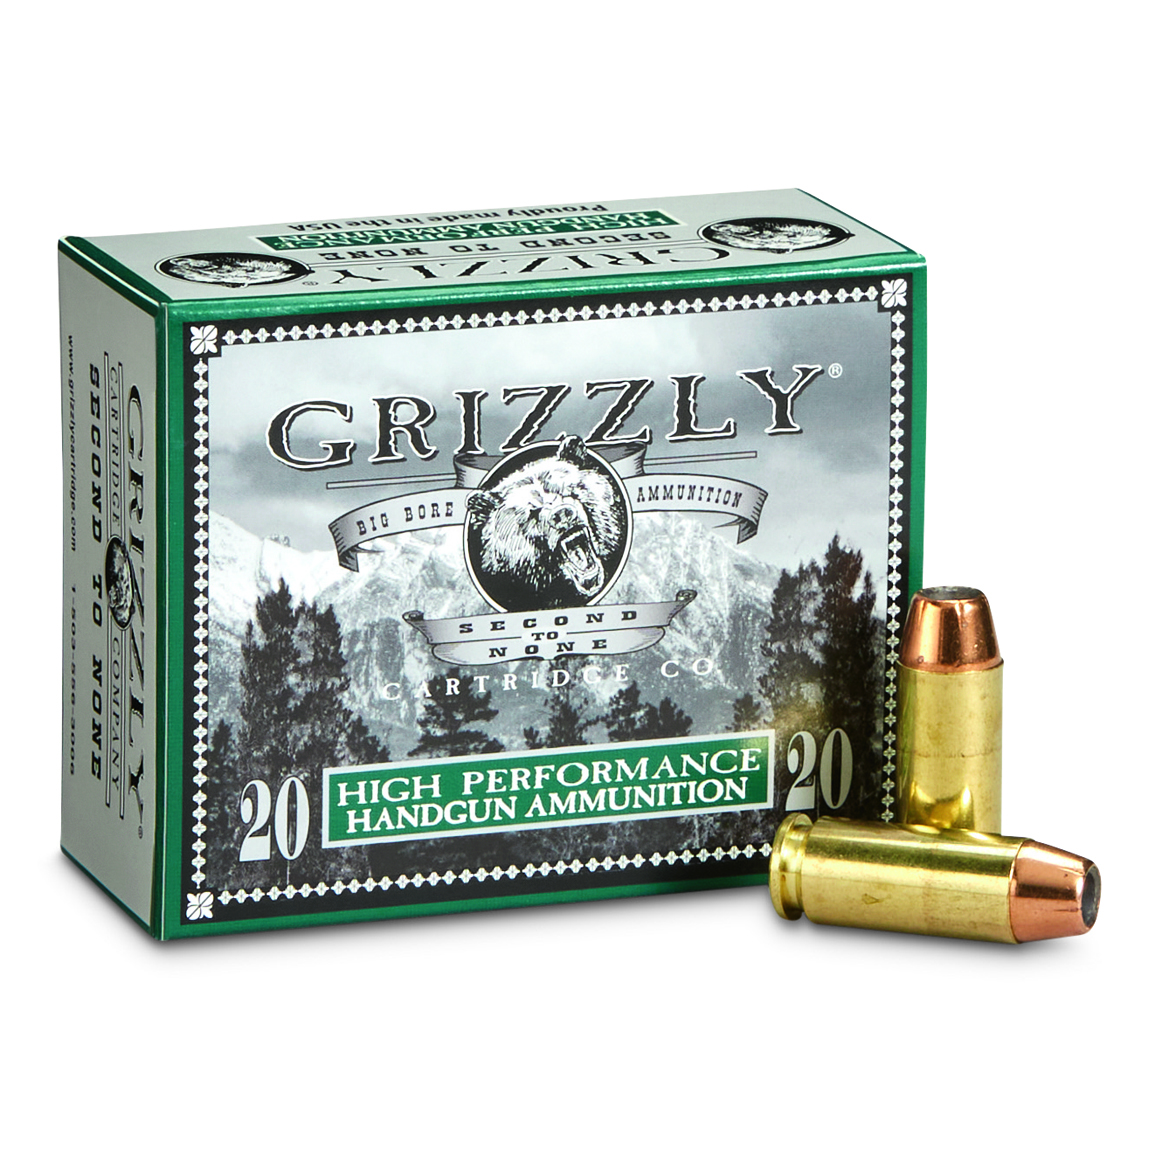 Grizzly Cartridge Co. High Performance Handgun, 10mm, JHP, 180 Grain, 20 Rounds